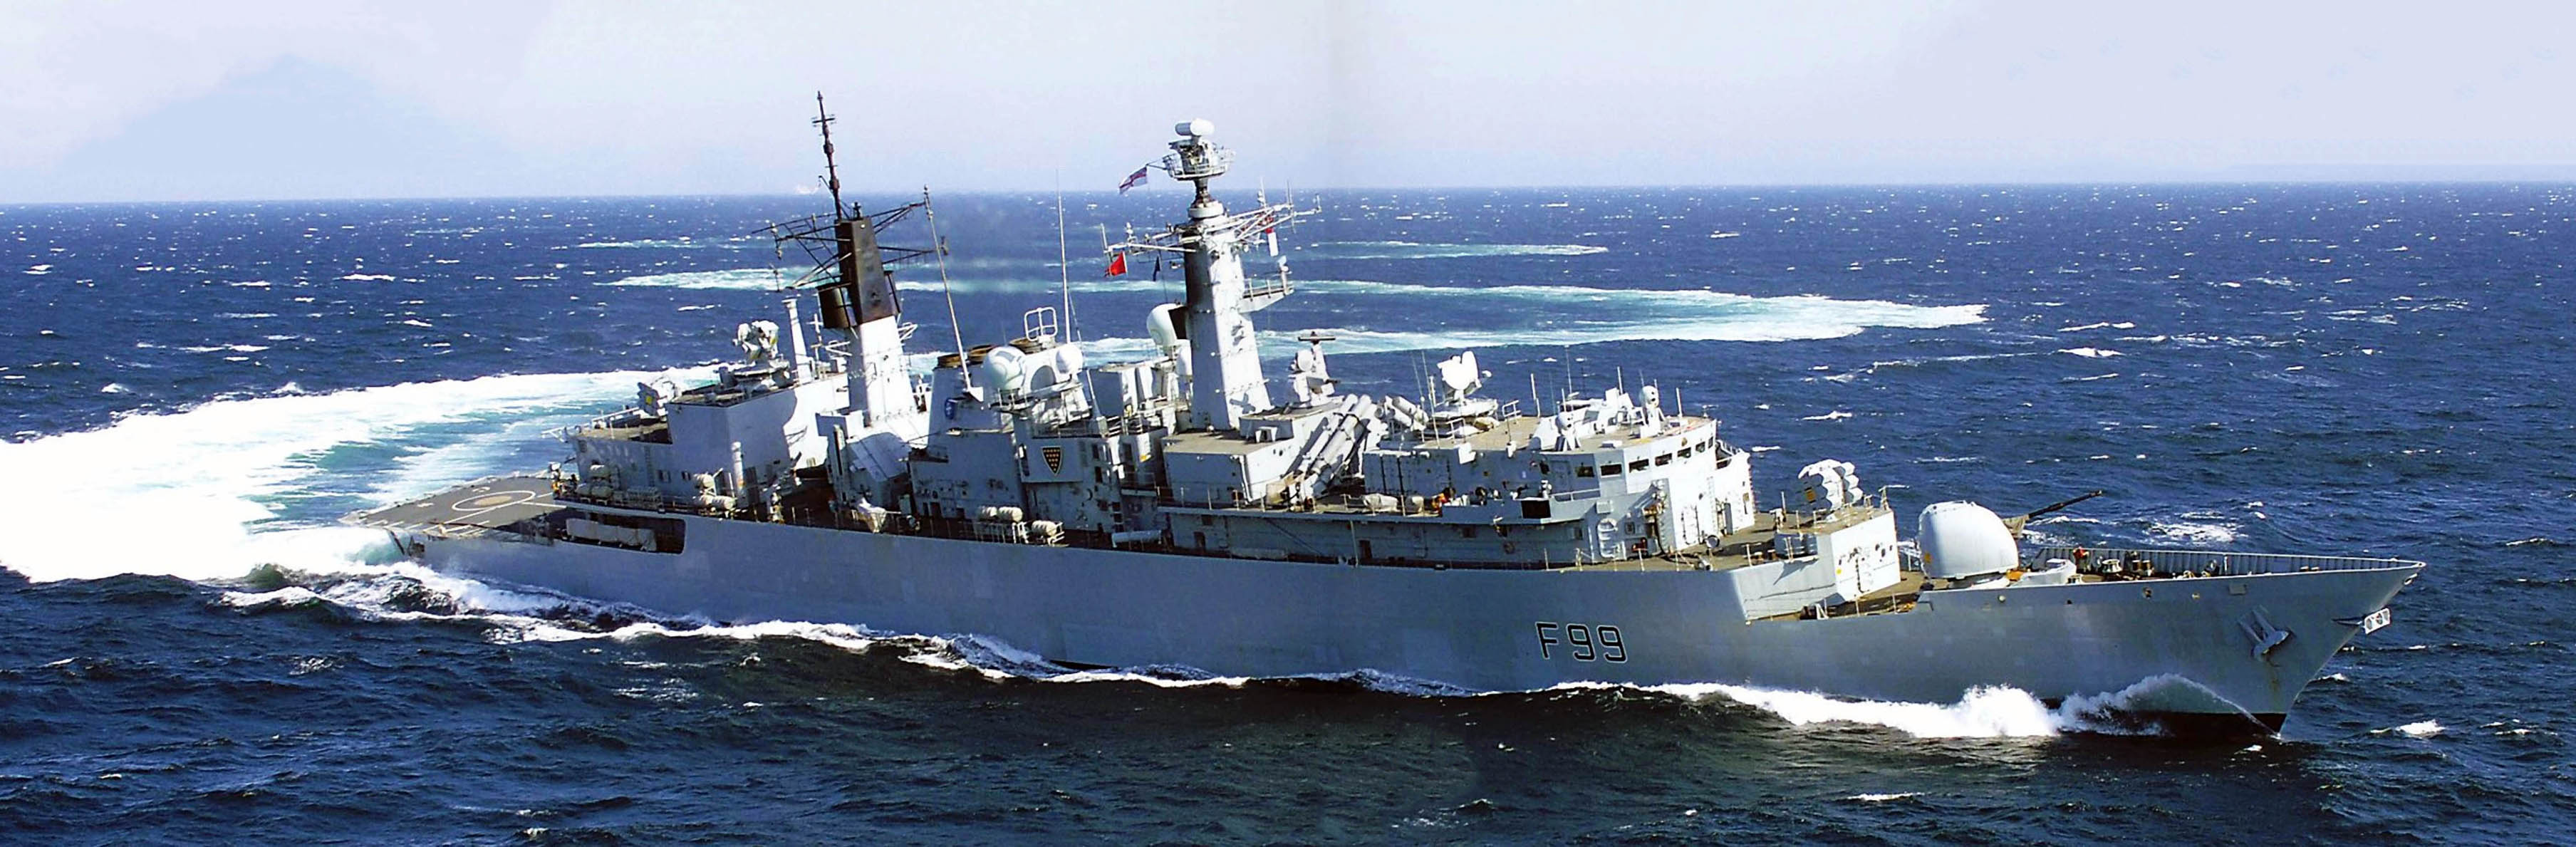 HMS Cornwall 1.jpg